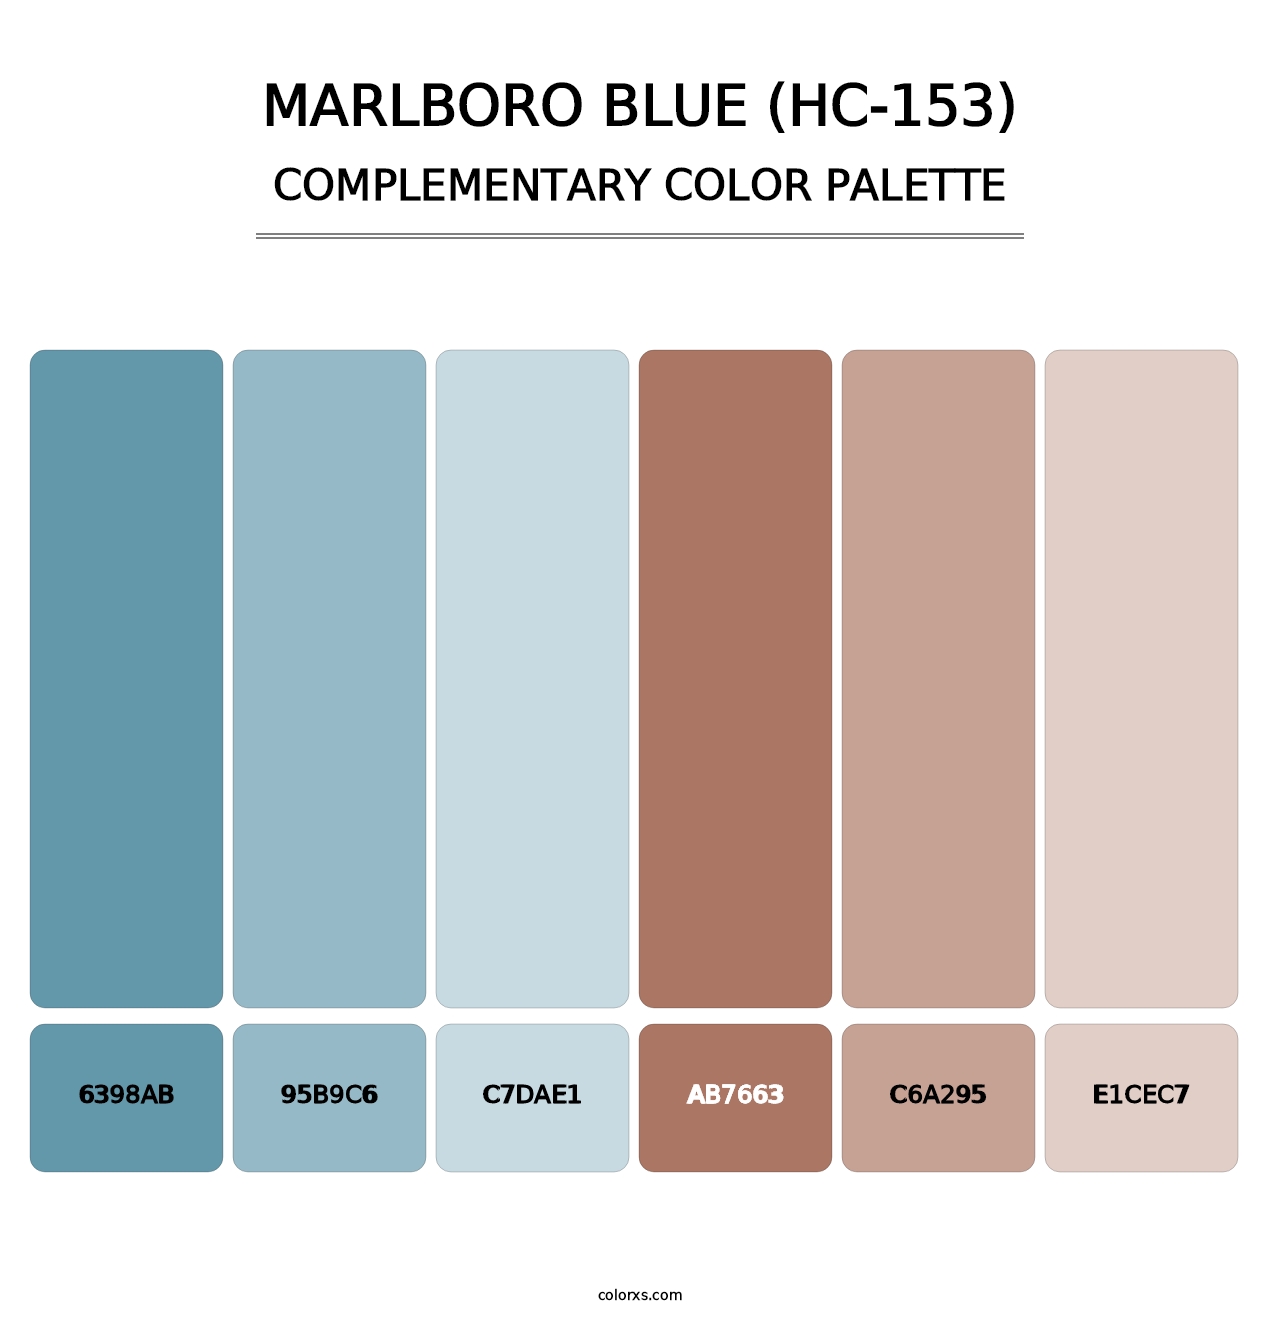 Marlboro Blue (HC-153) - Complementary Color Palette